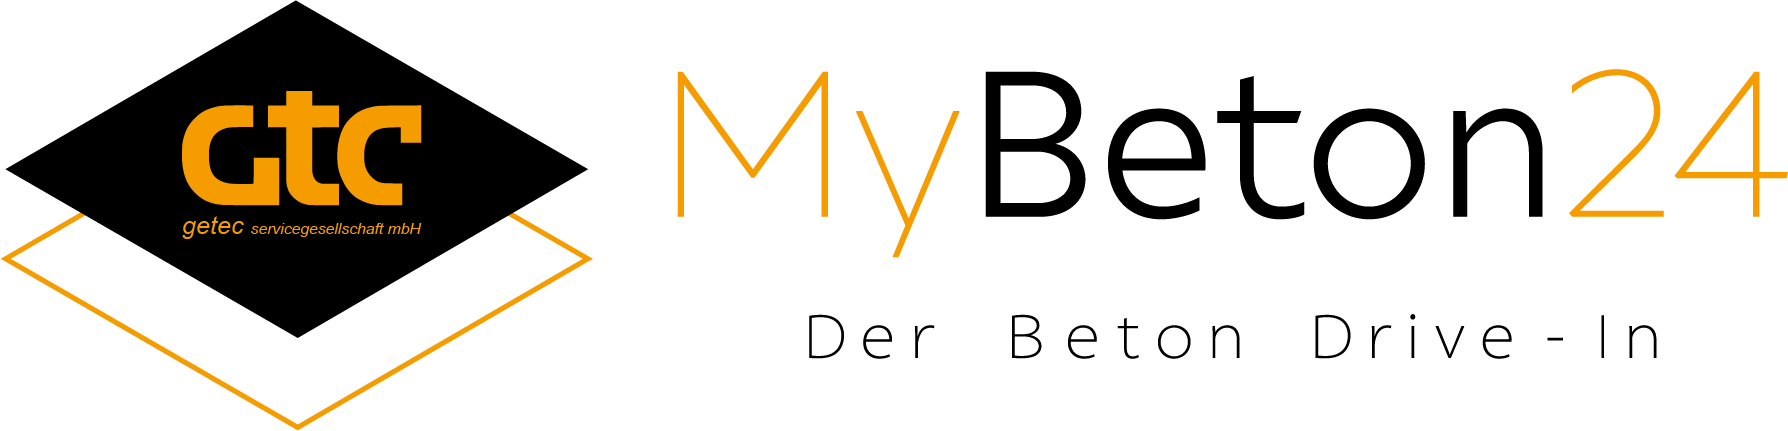 MyBeton24-Logo